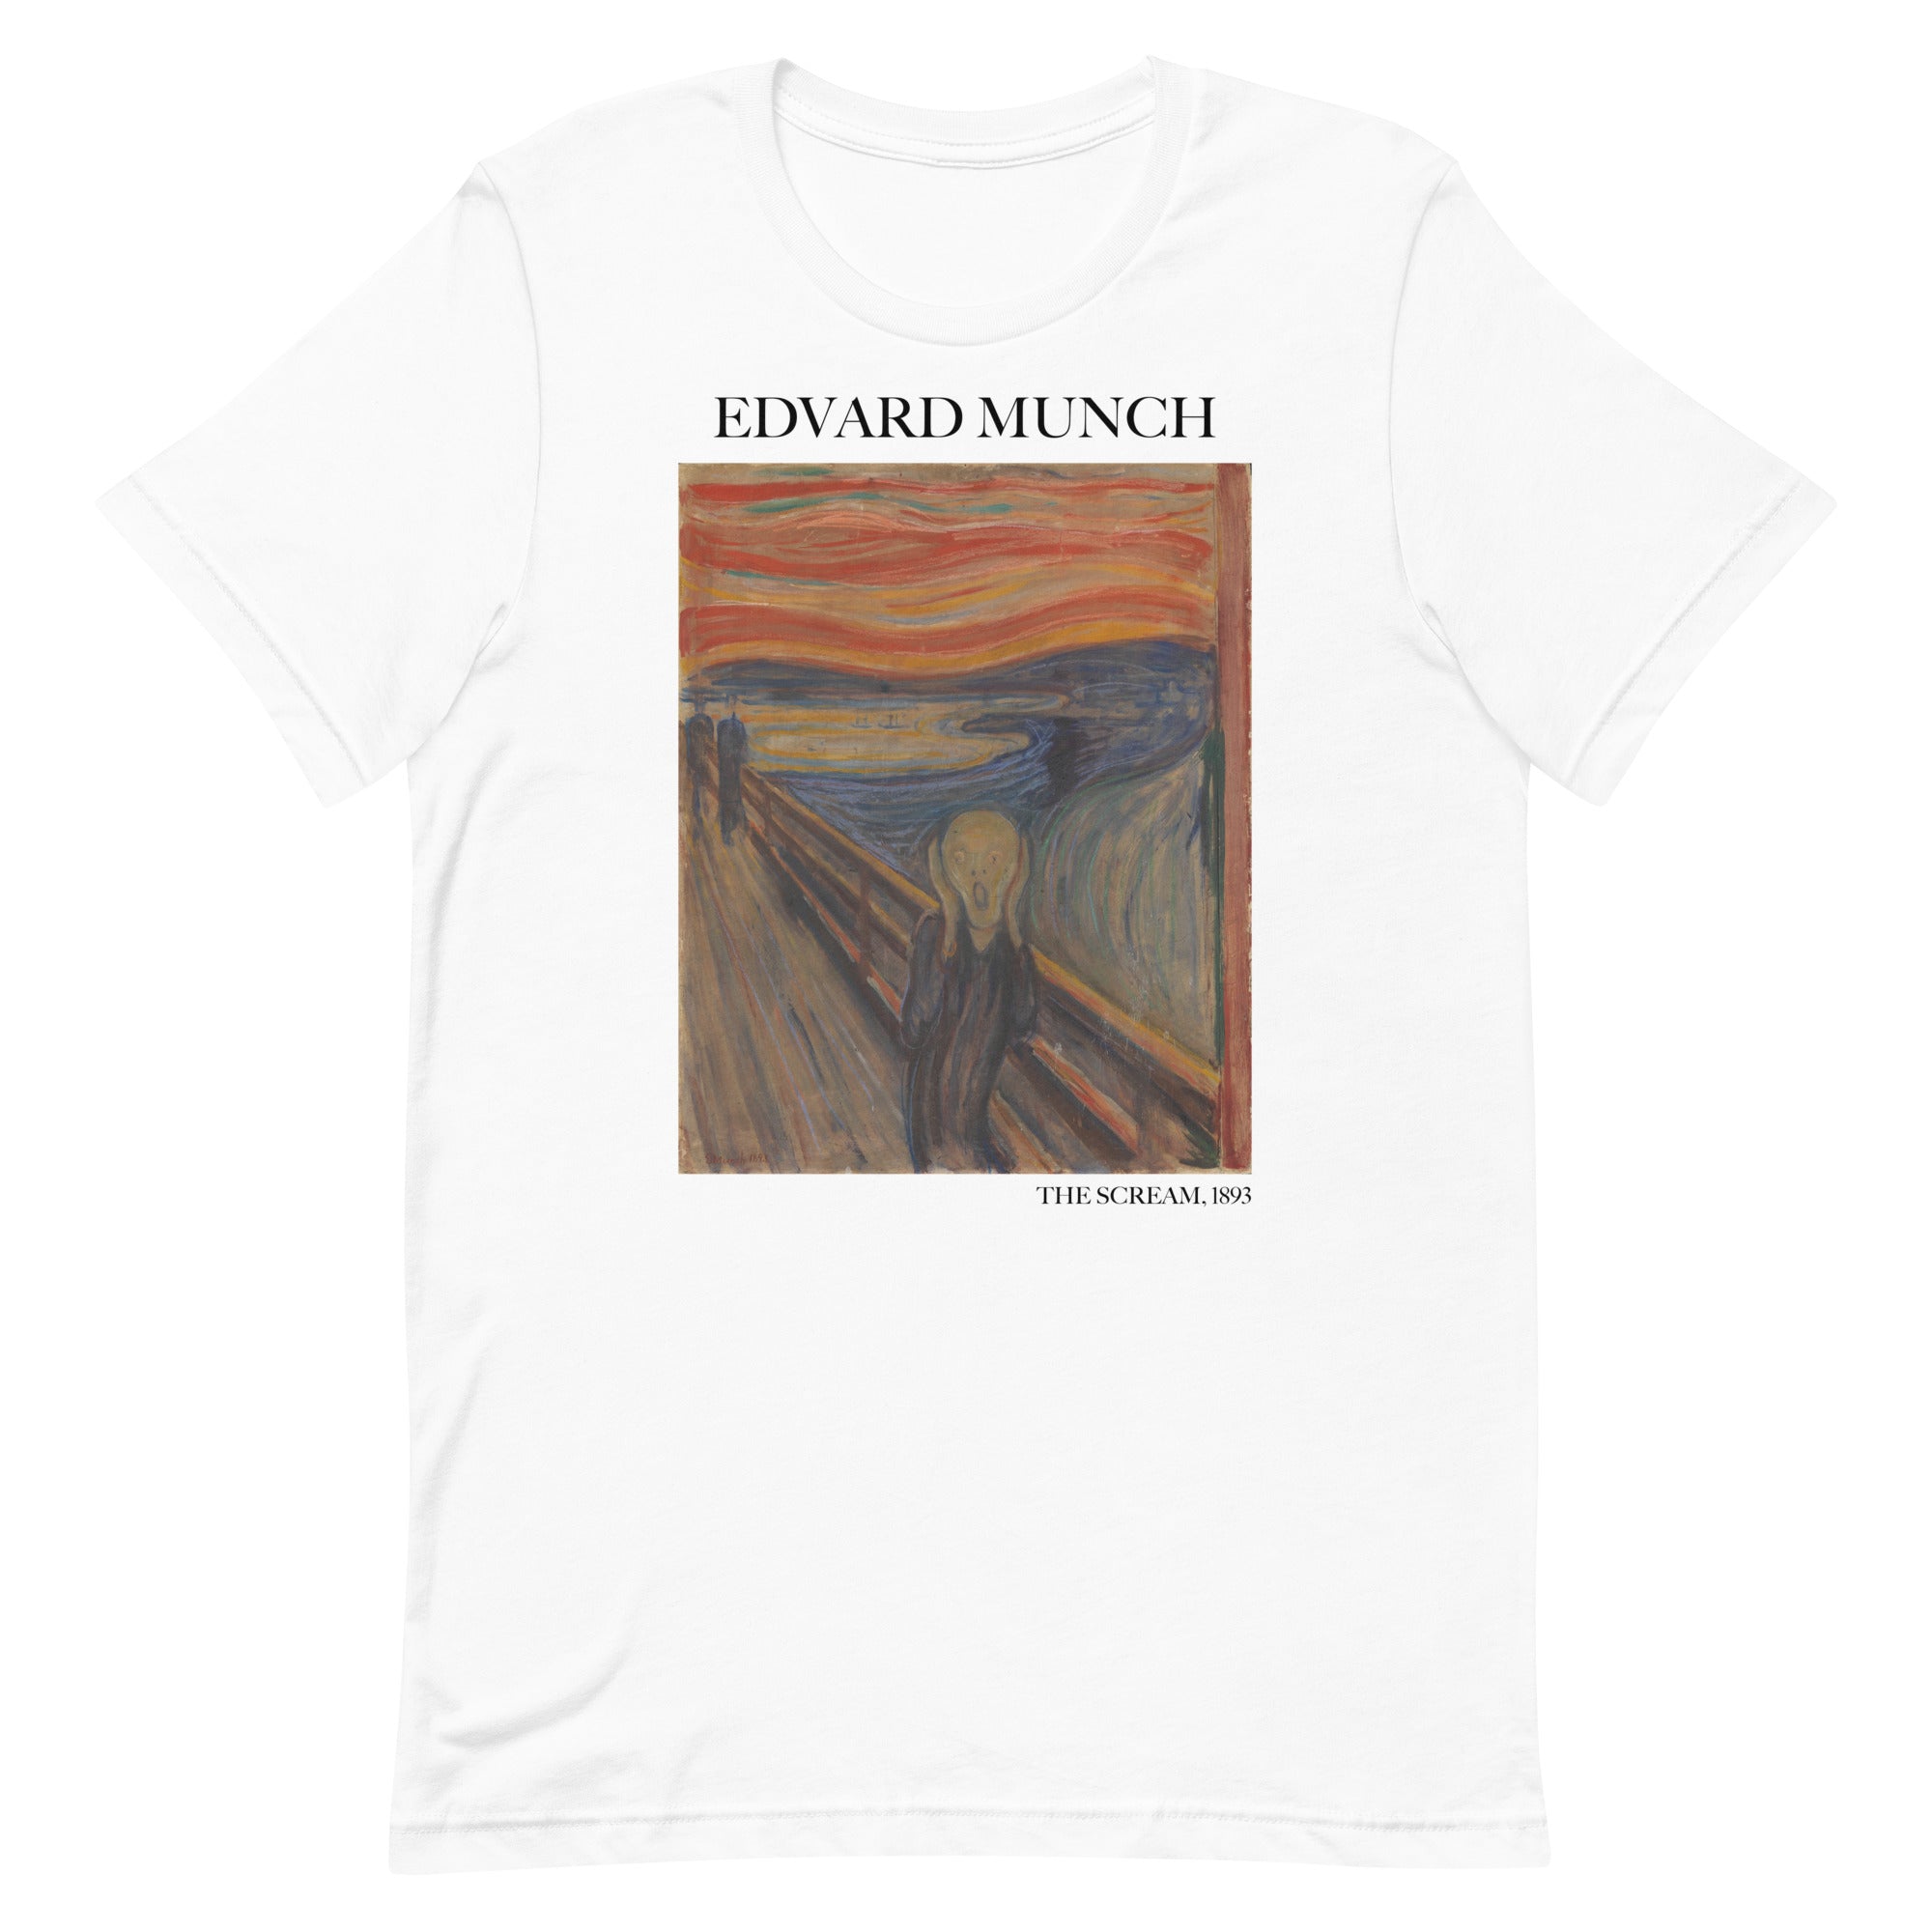 Edvard Munch 'The Scream' Famous Painting T-Shirt | Unisex Classic Art Tee